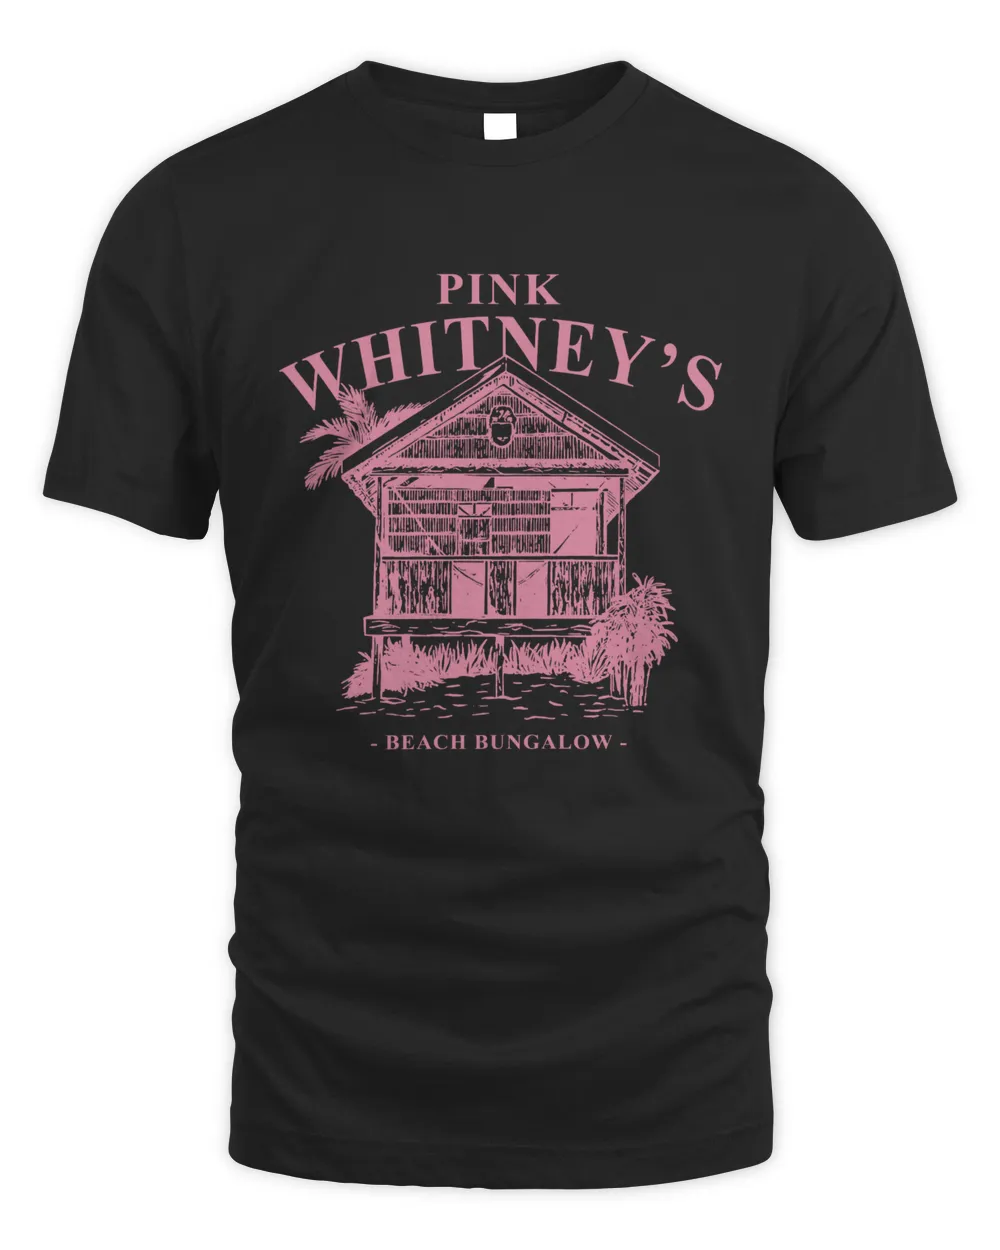 Whitneys Beach Bungalow Tee T-shirt Bring comfor